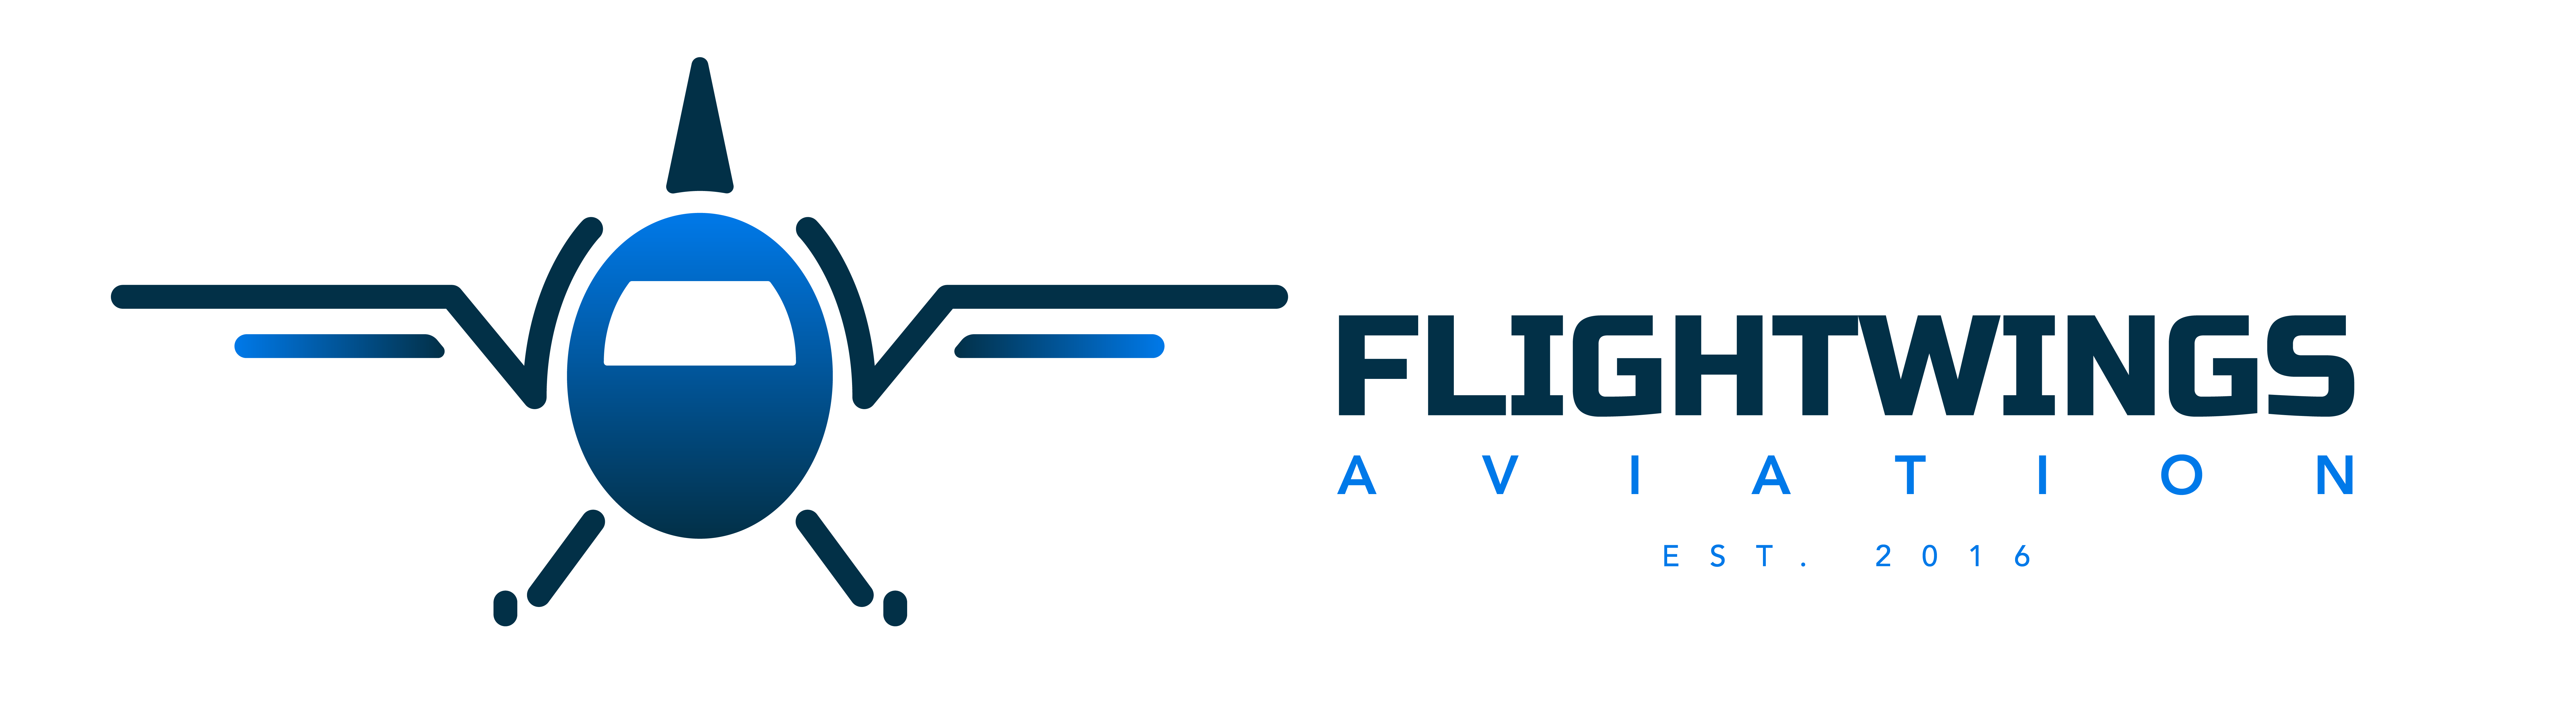 Flightwings Aviation LMS